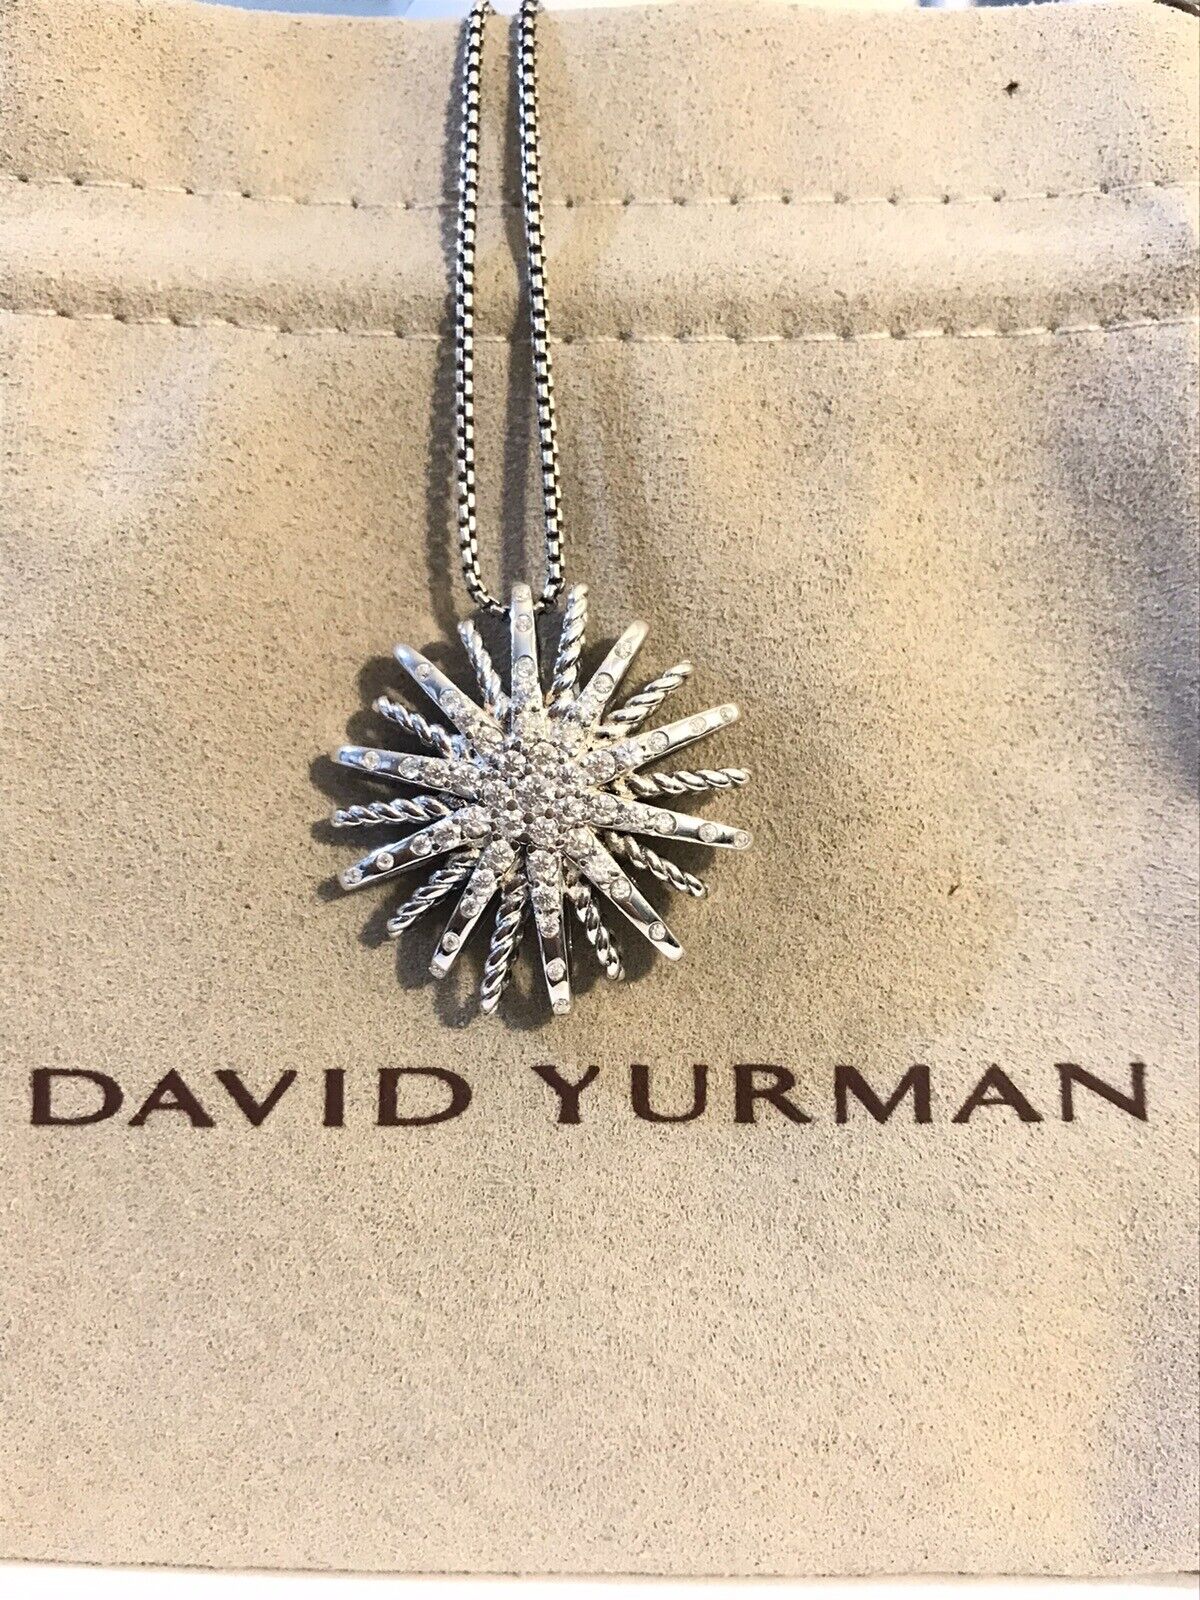 DAVID YURMAN STARBURST DIAMONDS Silver 925 Pendant 24MM Necklace 18-20 Inches